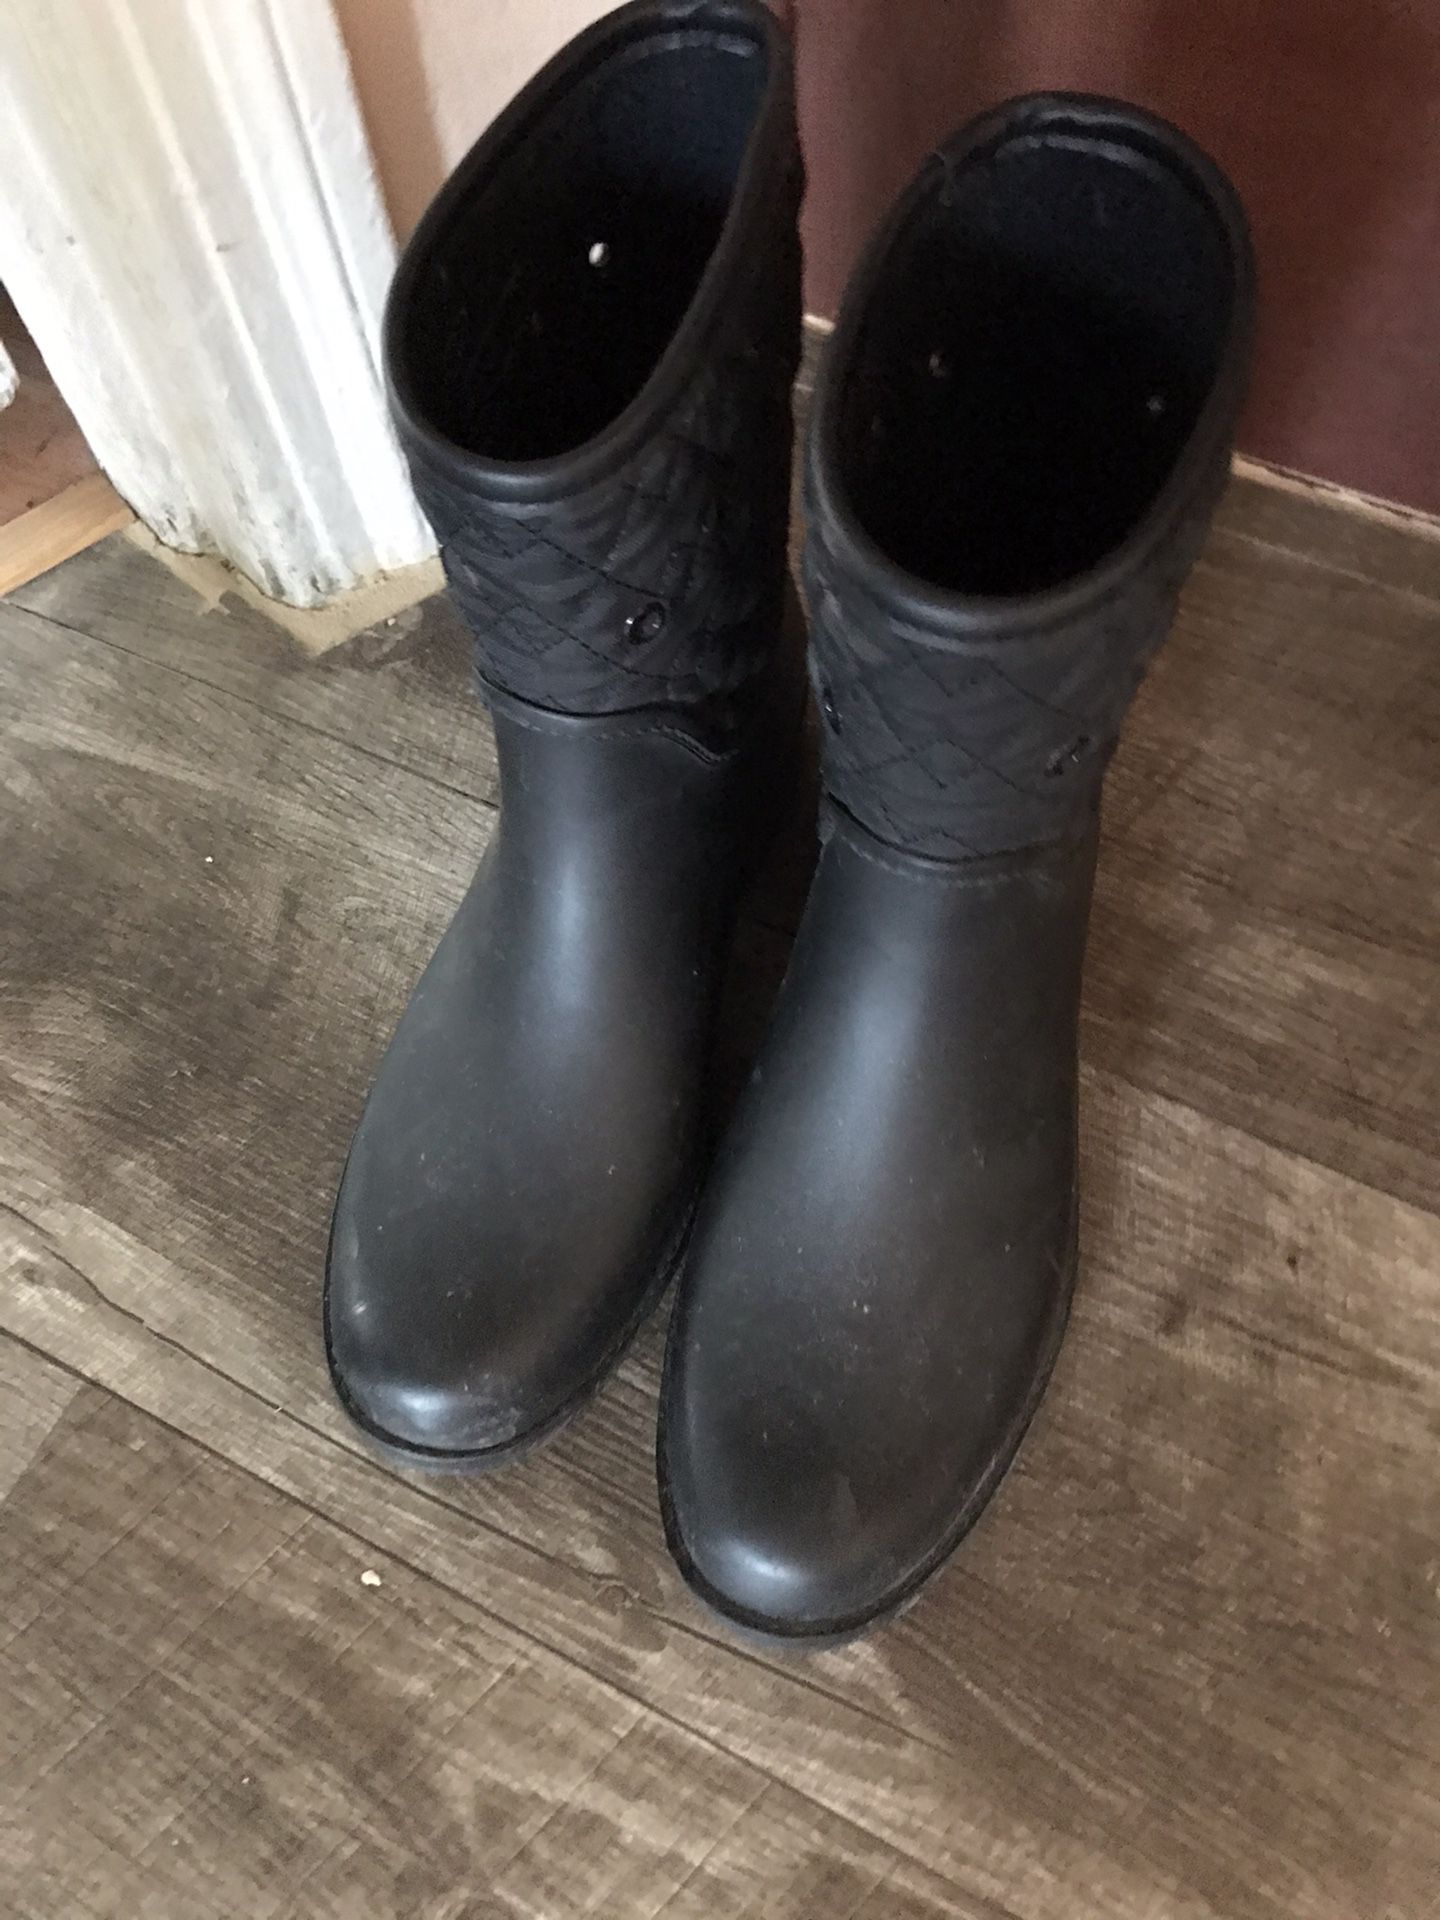 Rain boots “Jessica Simpson”